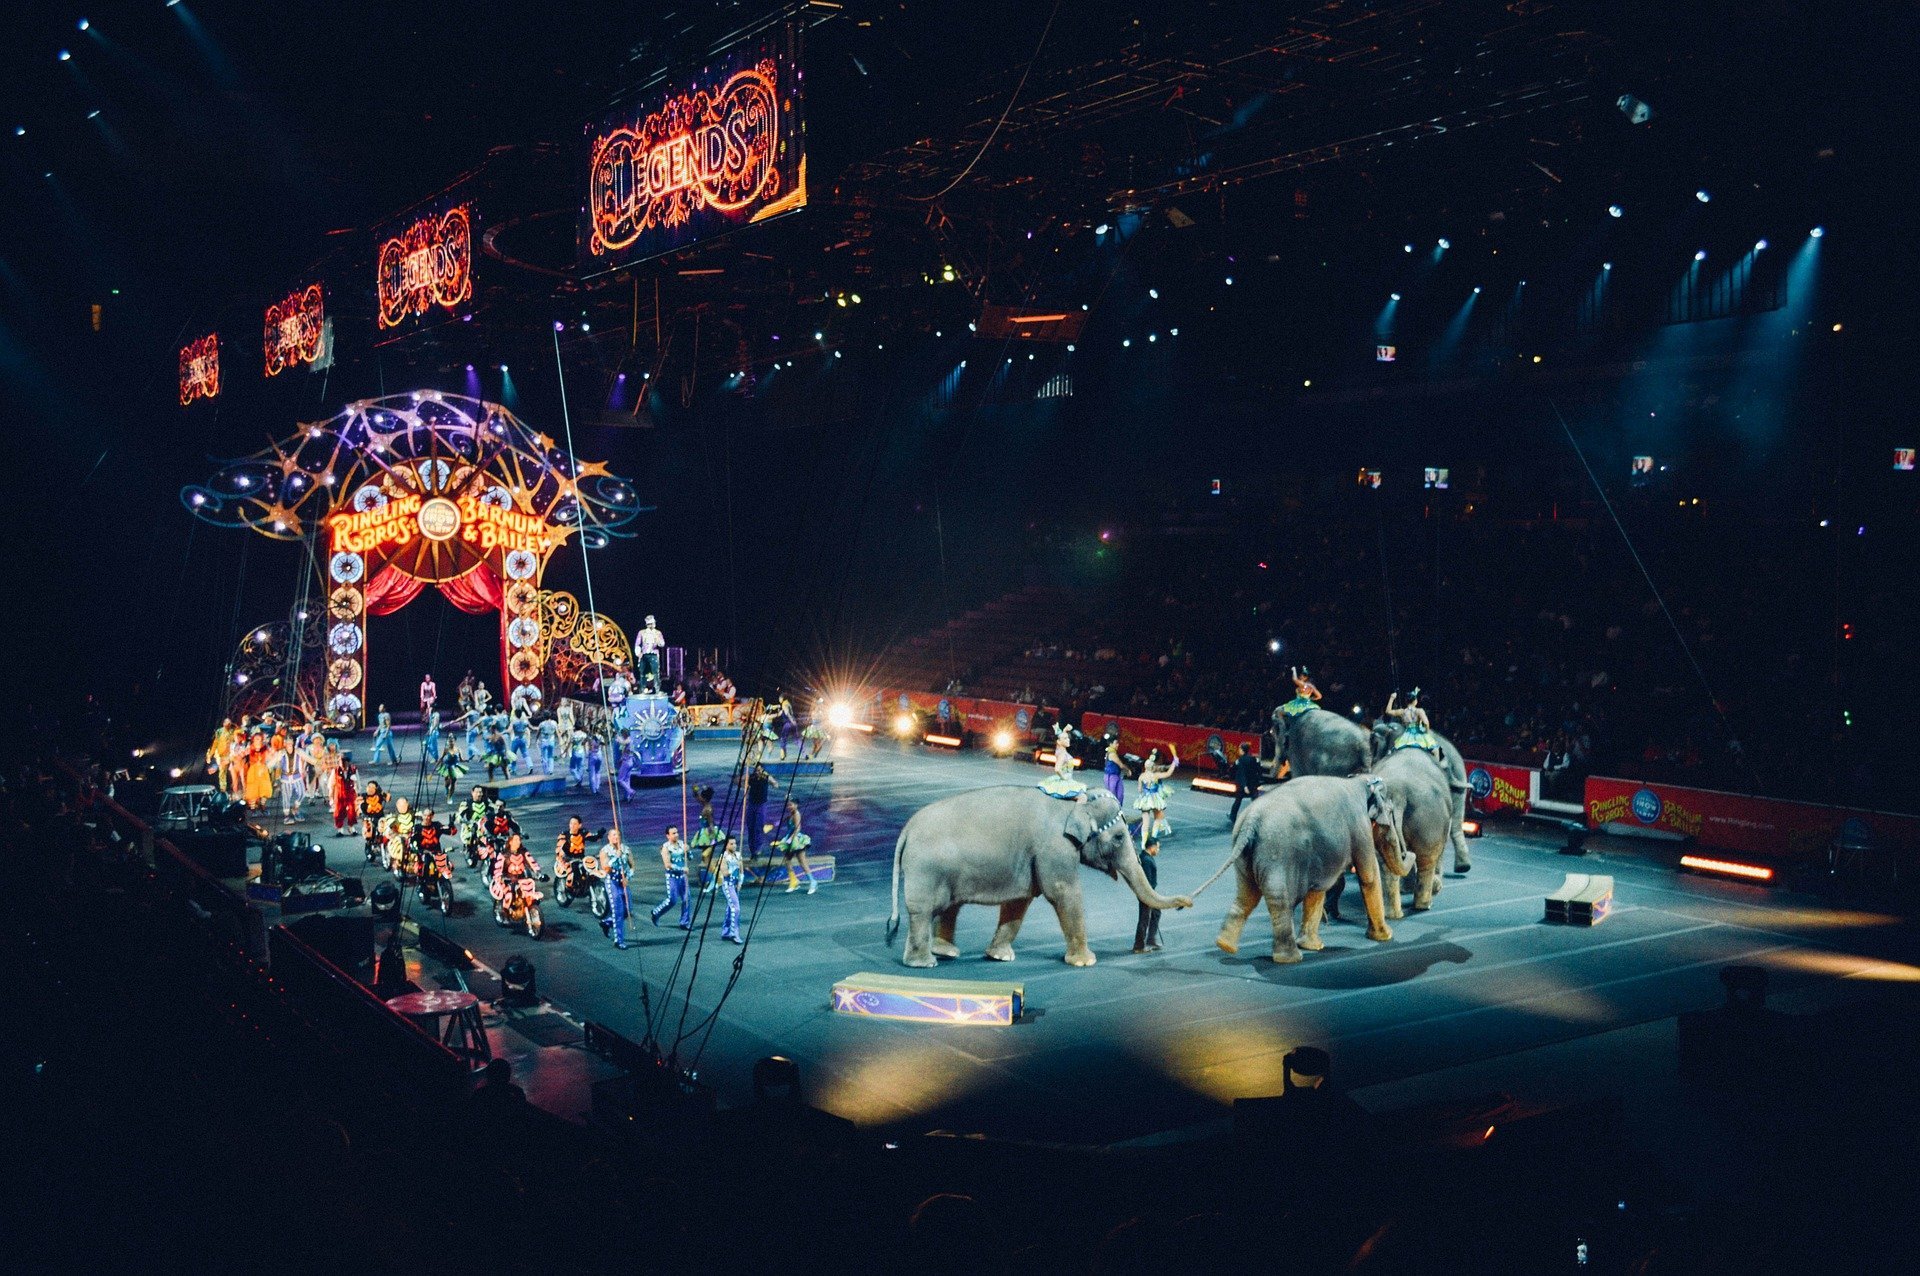 Circus arena with elephants. | Source: Pixabay